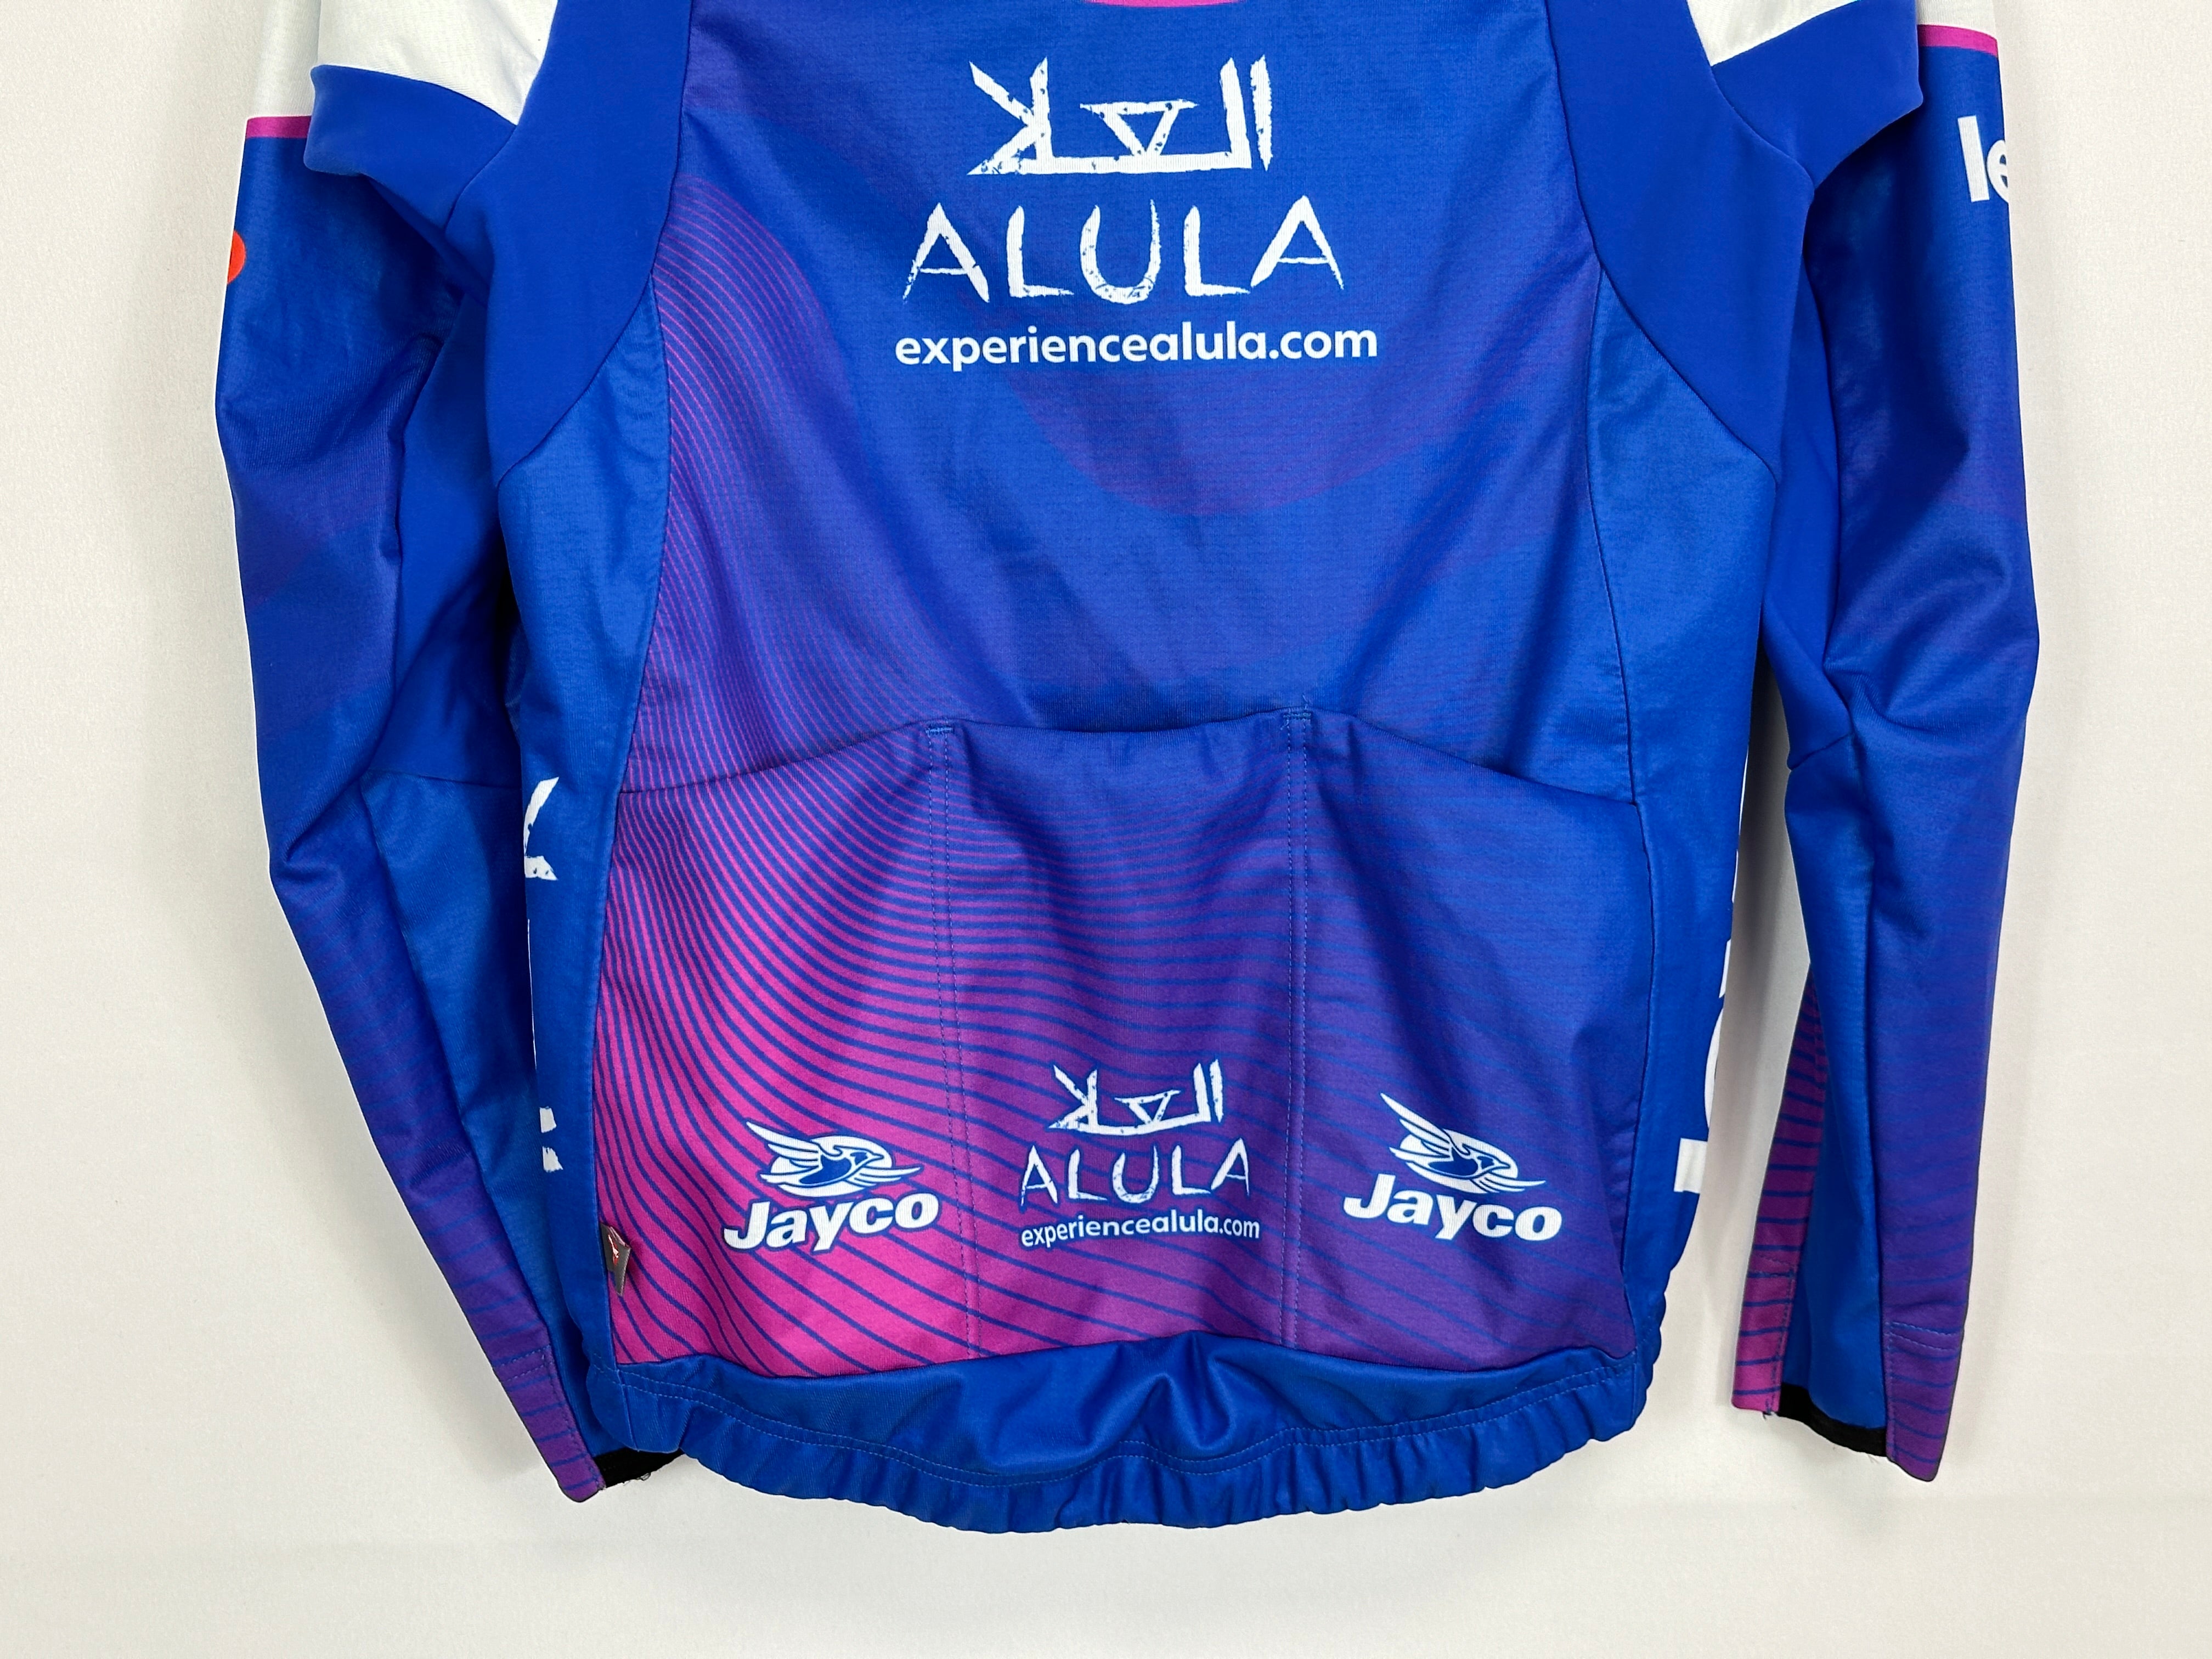 Team Jayco Alula - L/S Lightweight Rain Jacket by Alé